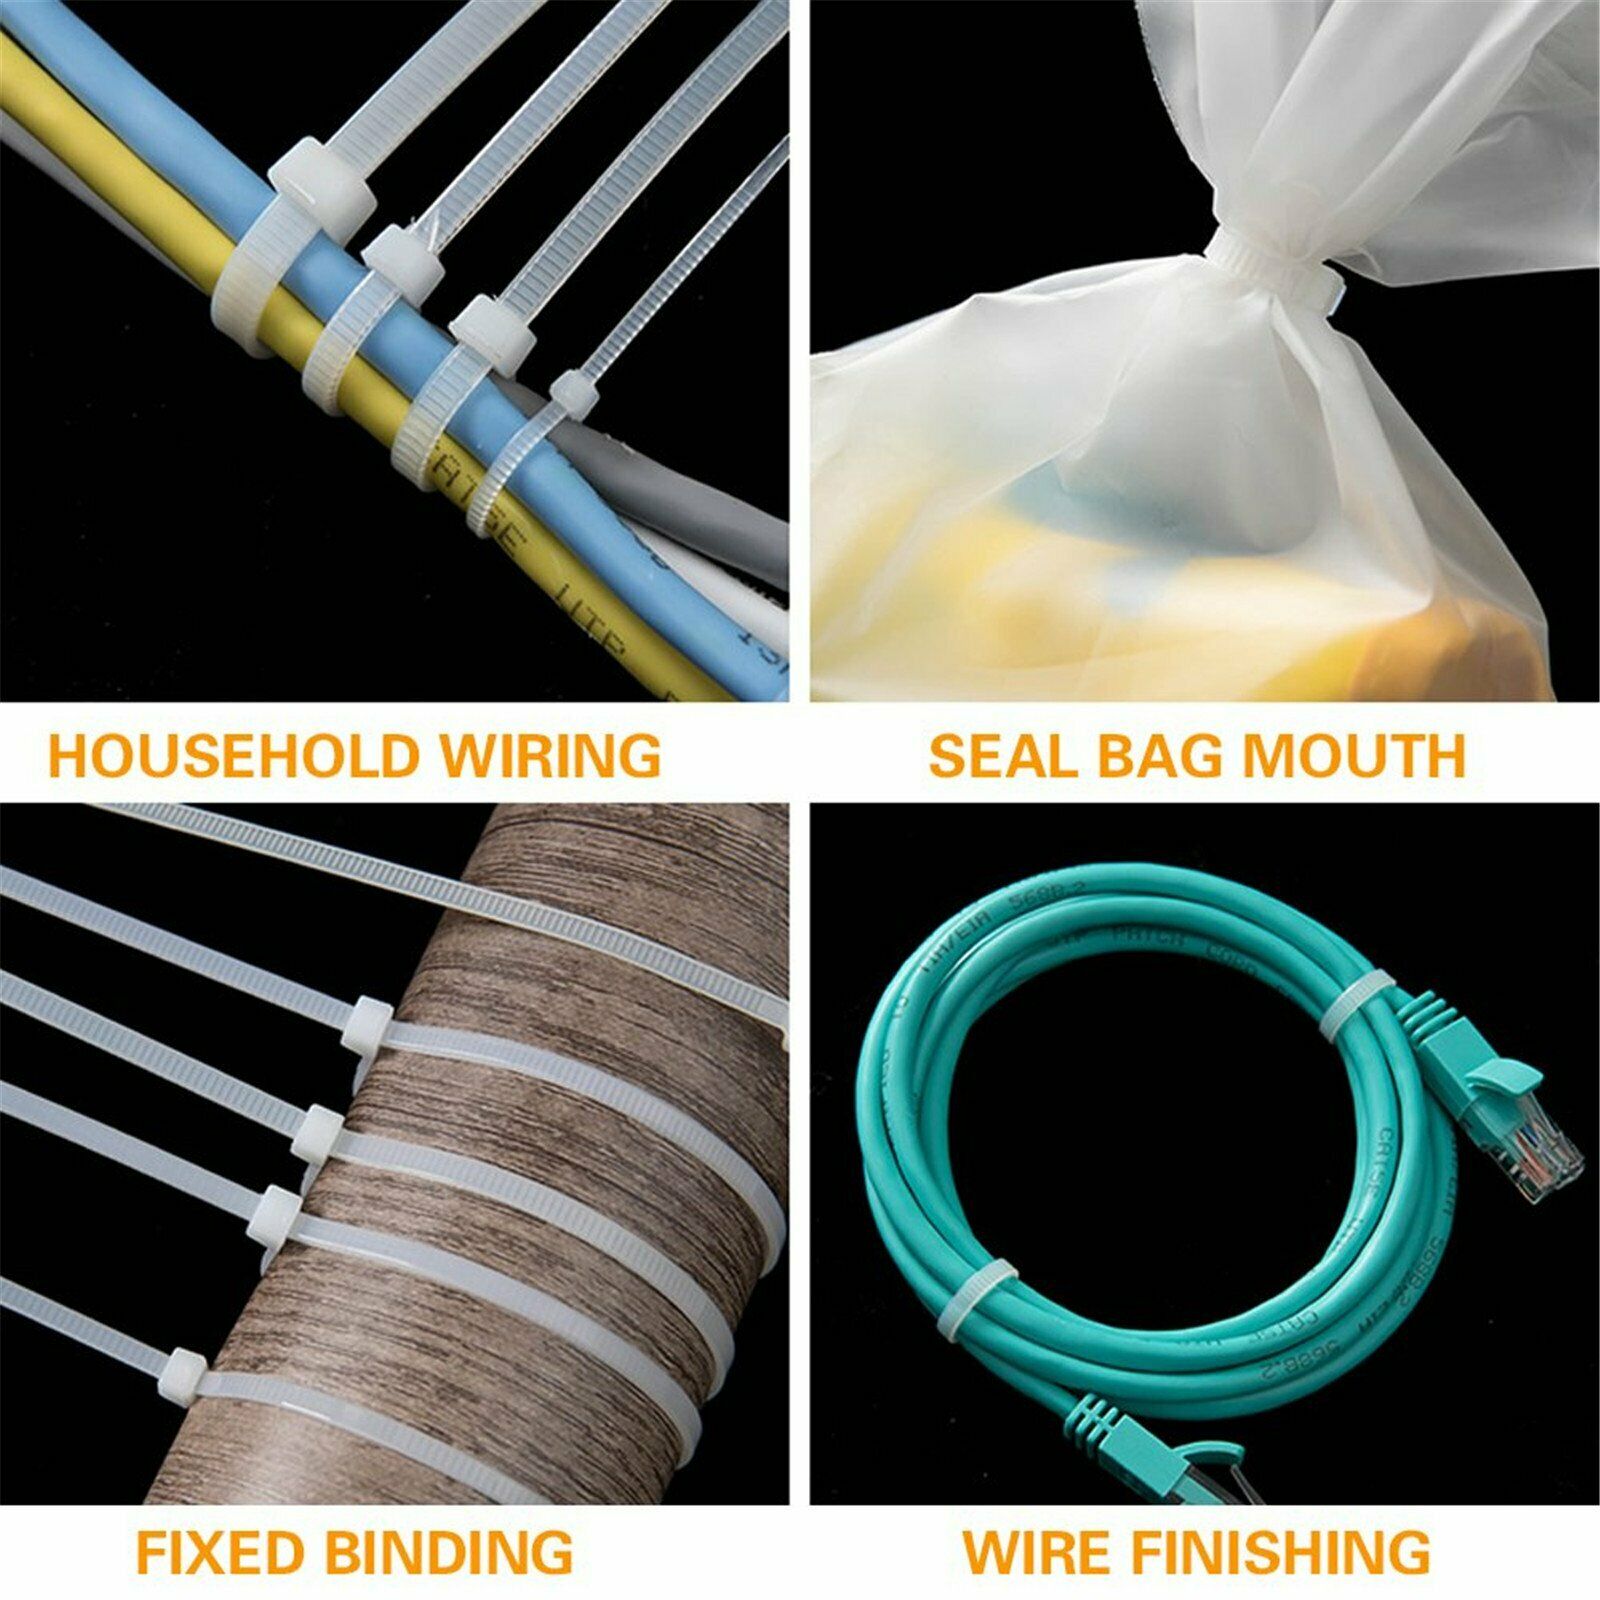 Cable Ties Zip Ties Nylon UV Stabilized 100x Bulk Cable Tie